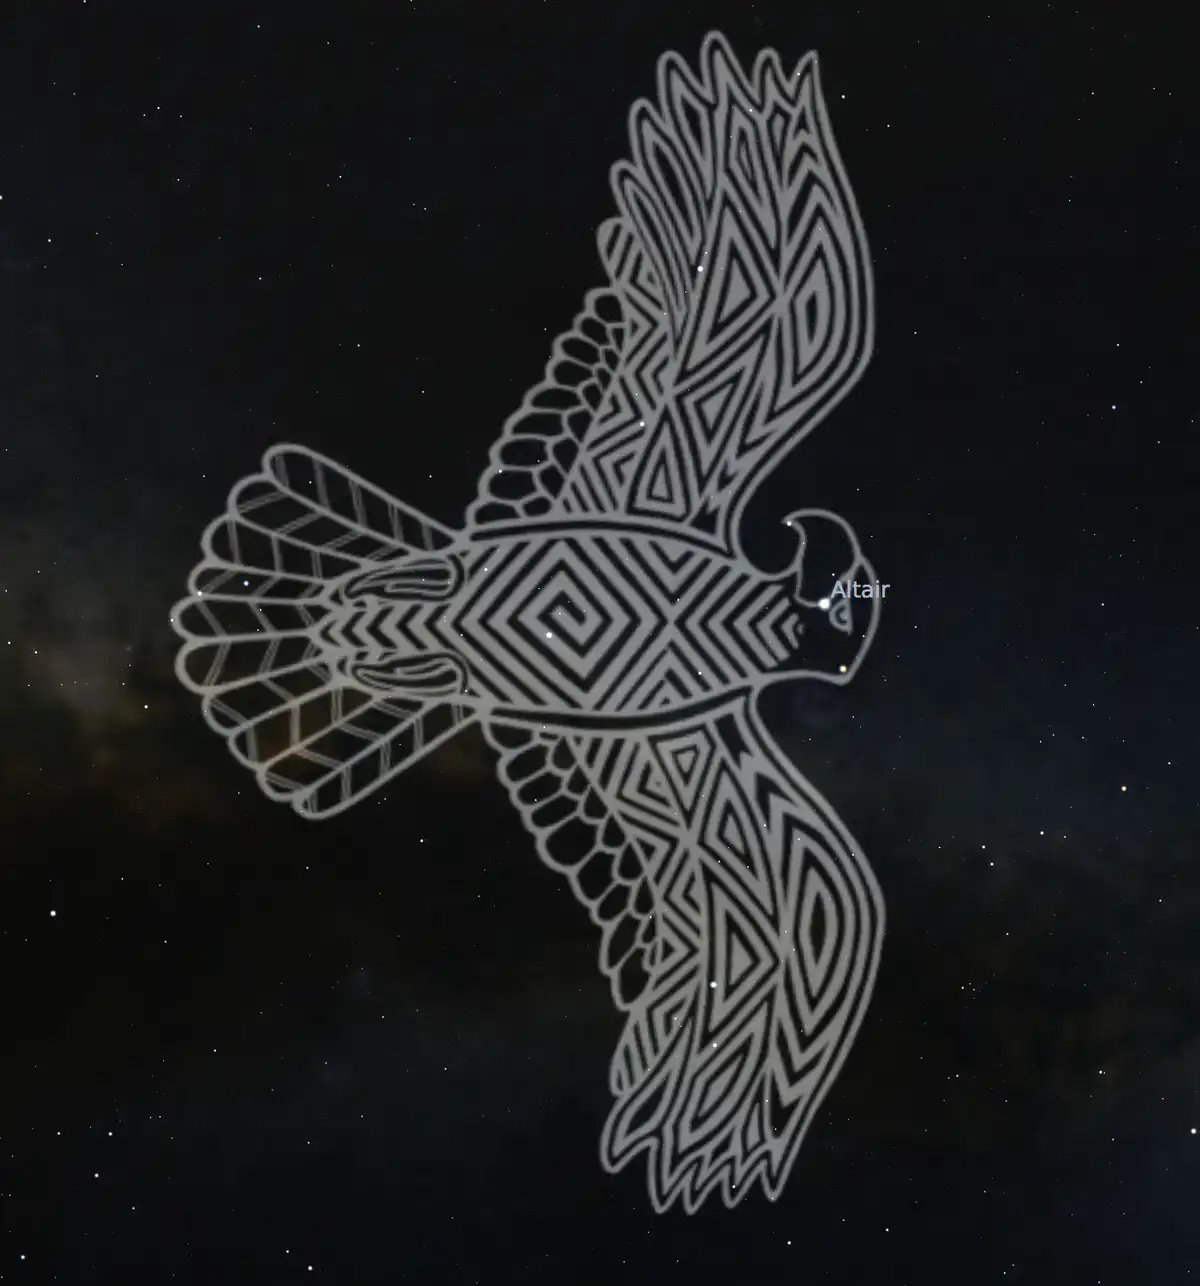 Maliyan, the Wedge-tailed Eagle in Wiradjuri traditions. Stellarium, Wiraduri artist Scott 'Sauce' Towney